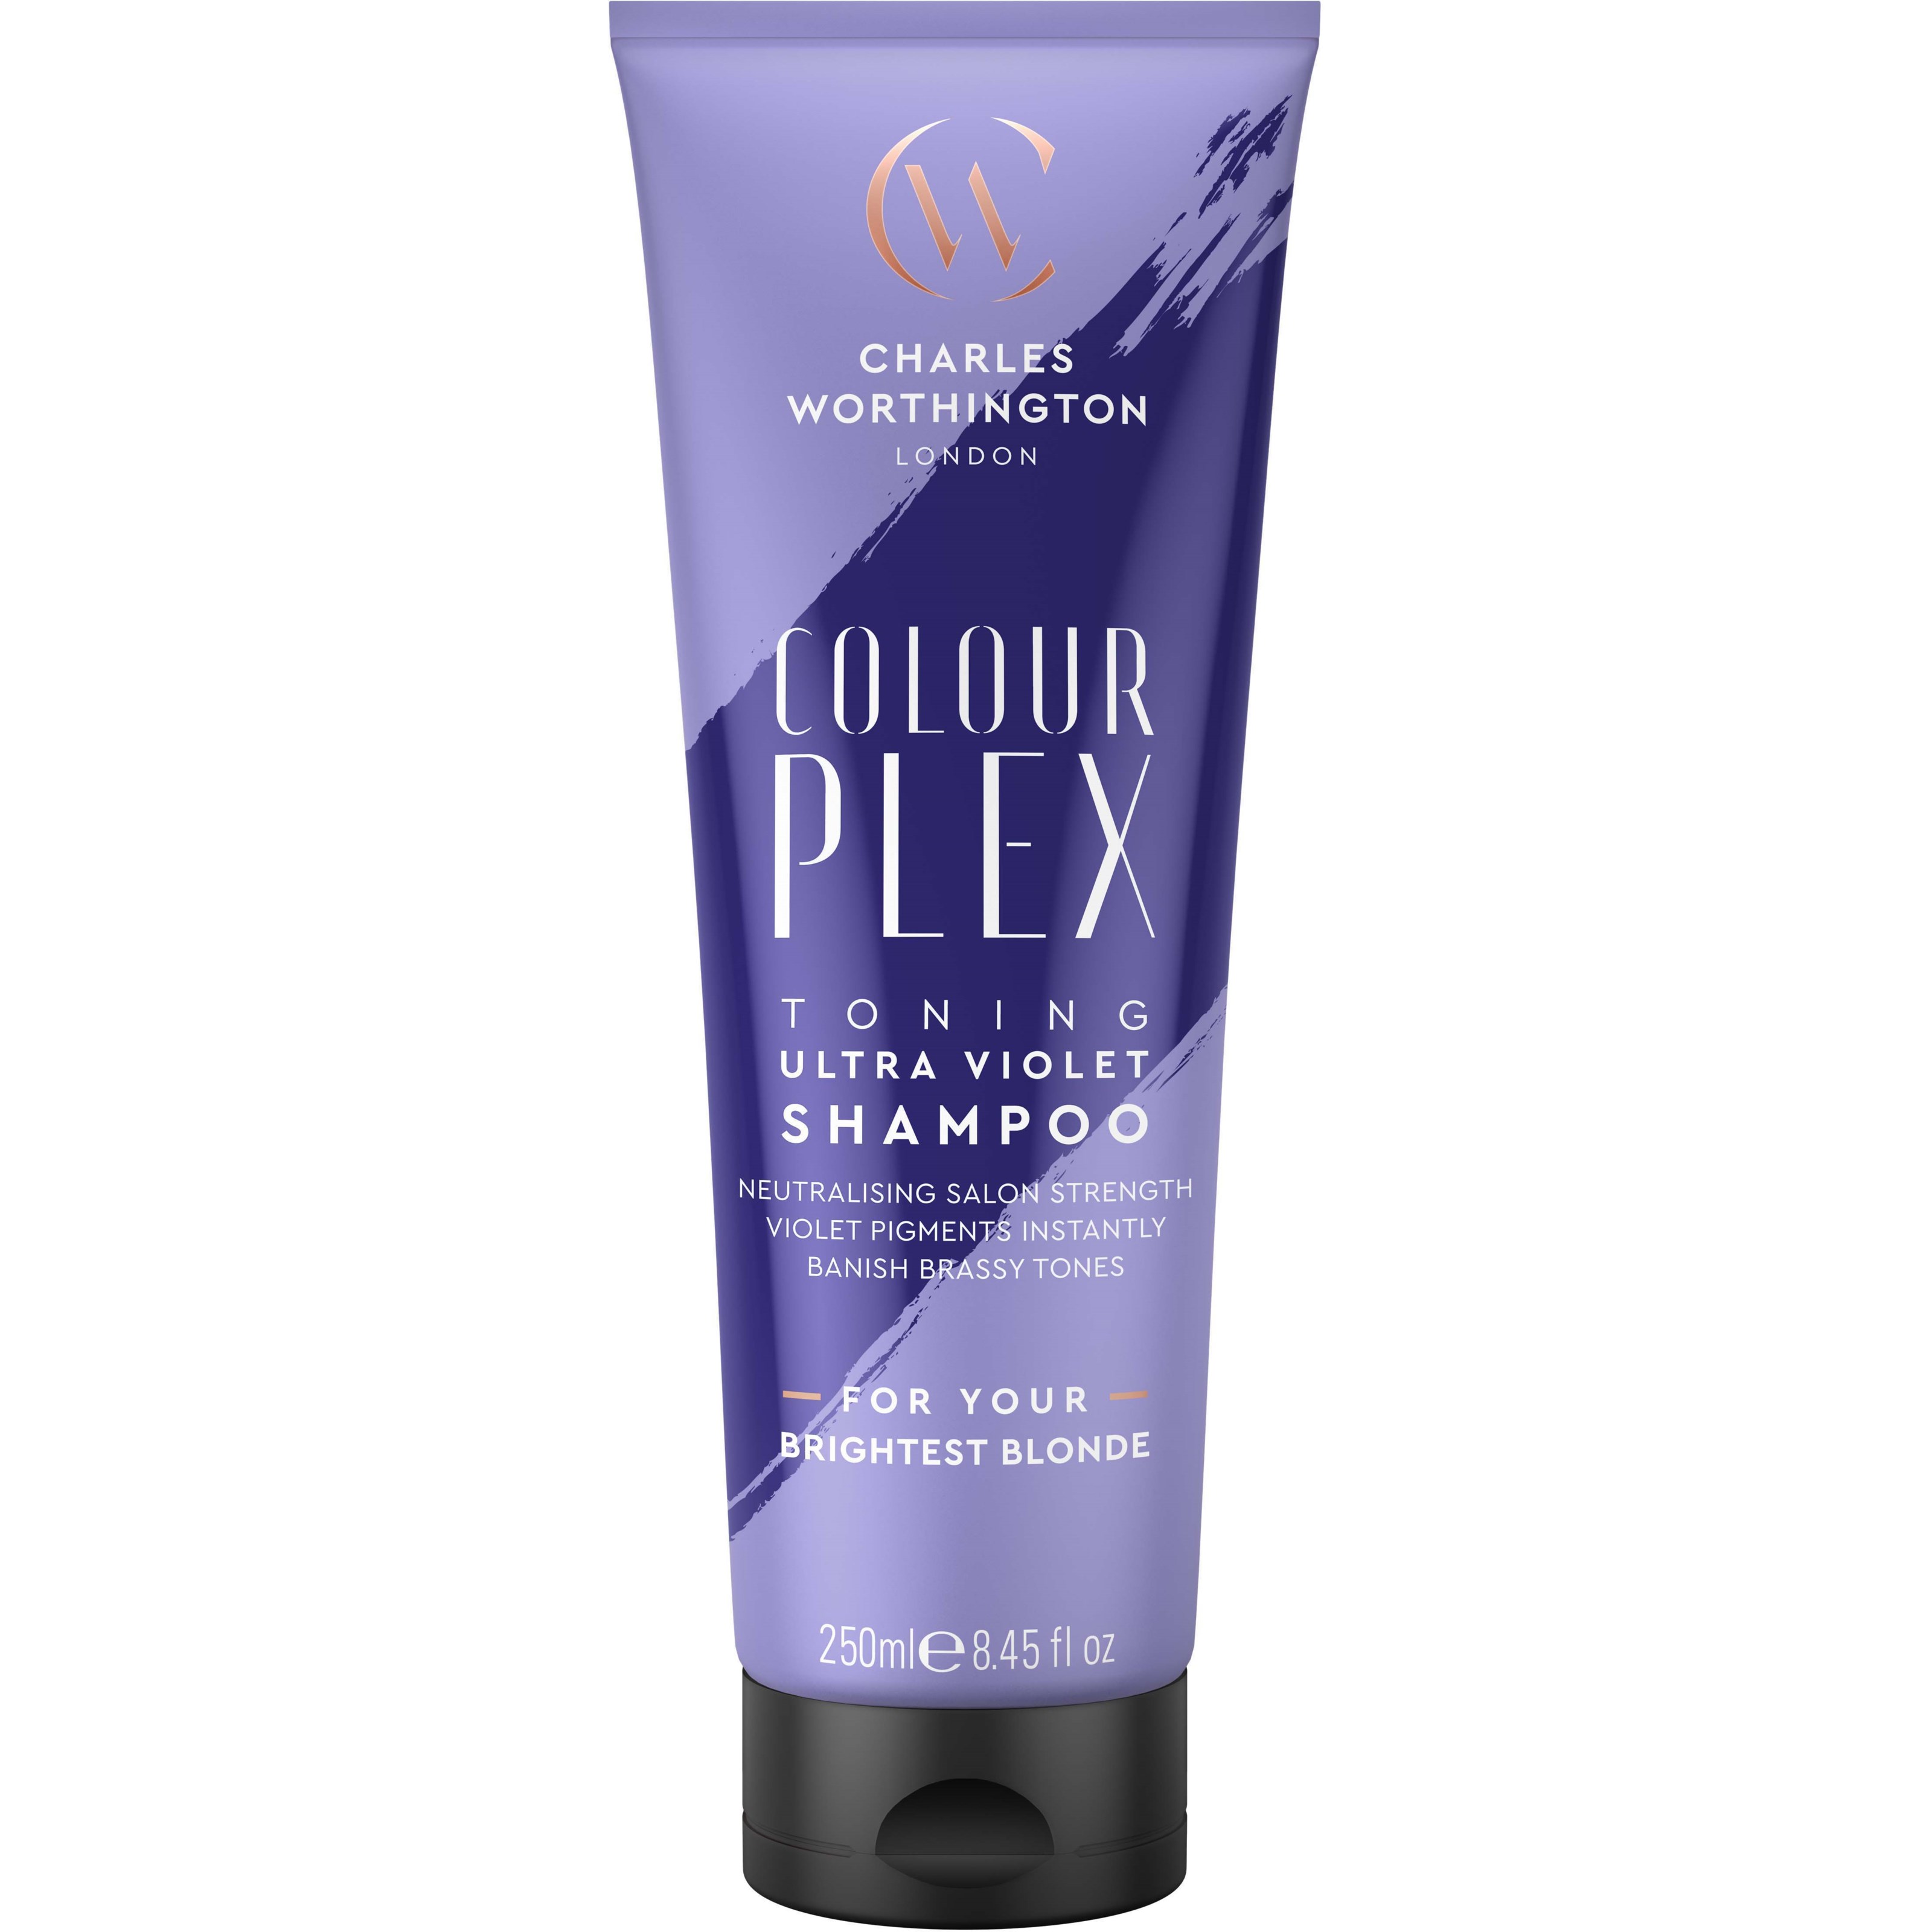 Bilde av Charles Worthington Colourplex Toning Ultra Violet Shampoo 250 Ml